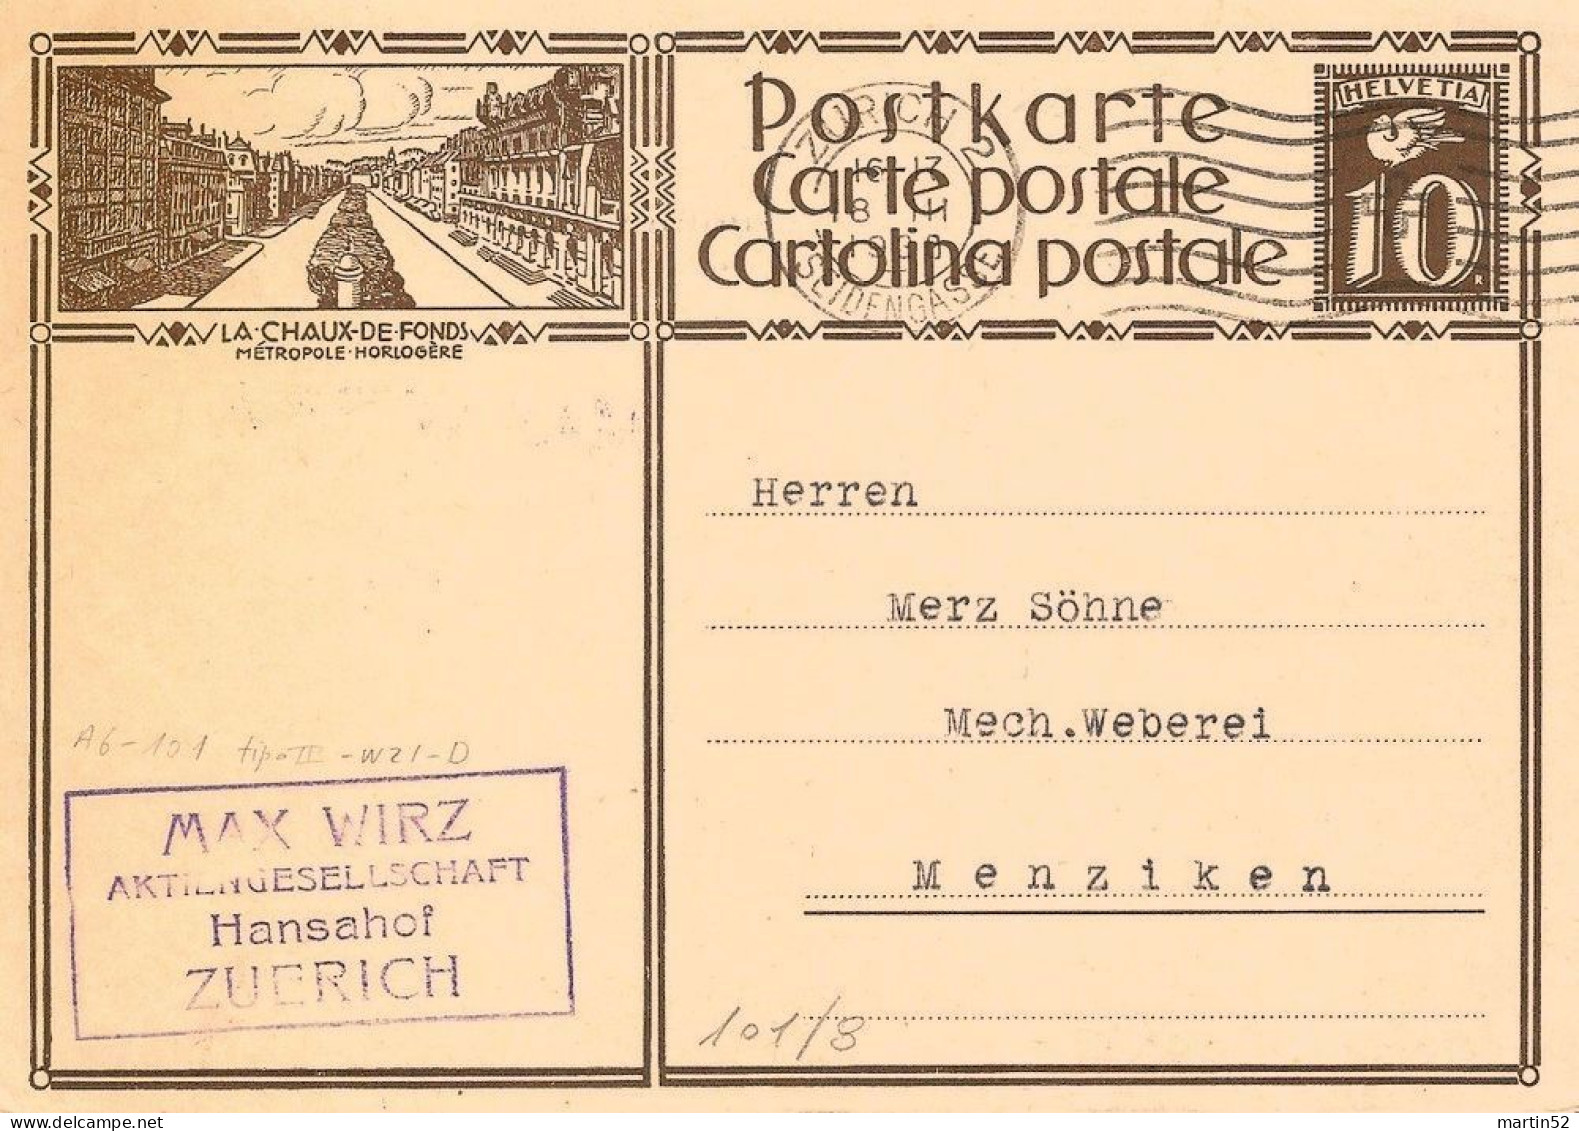 Schweiz Suisse 1930: Bild-PK CPI  LA CHAUX-DE-FONDS MÉTROPOLE HORLOGÈRE Mit Stempel ZÜRICH 18.III.1930 - Uhrmacherei